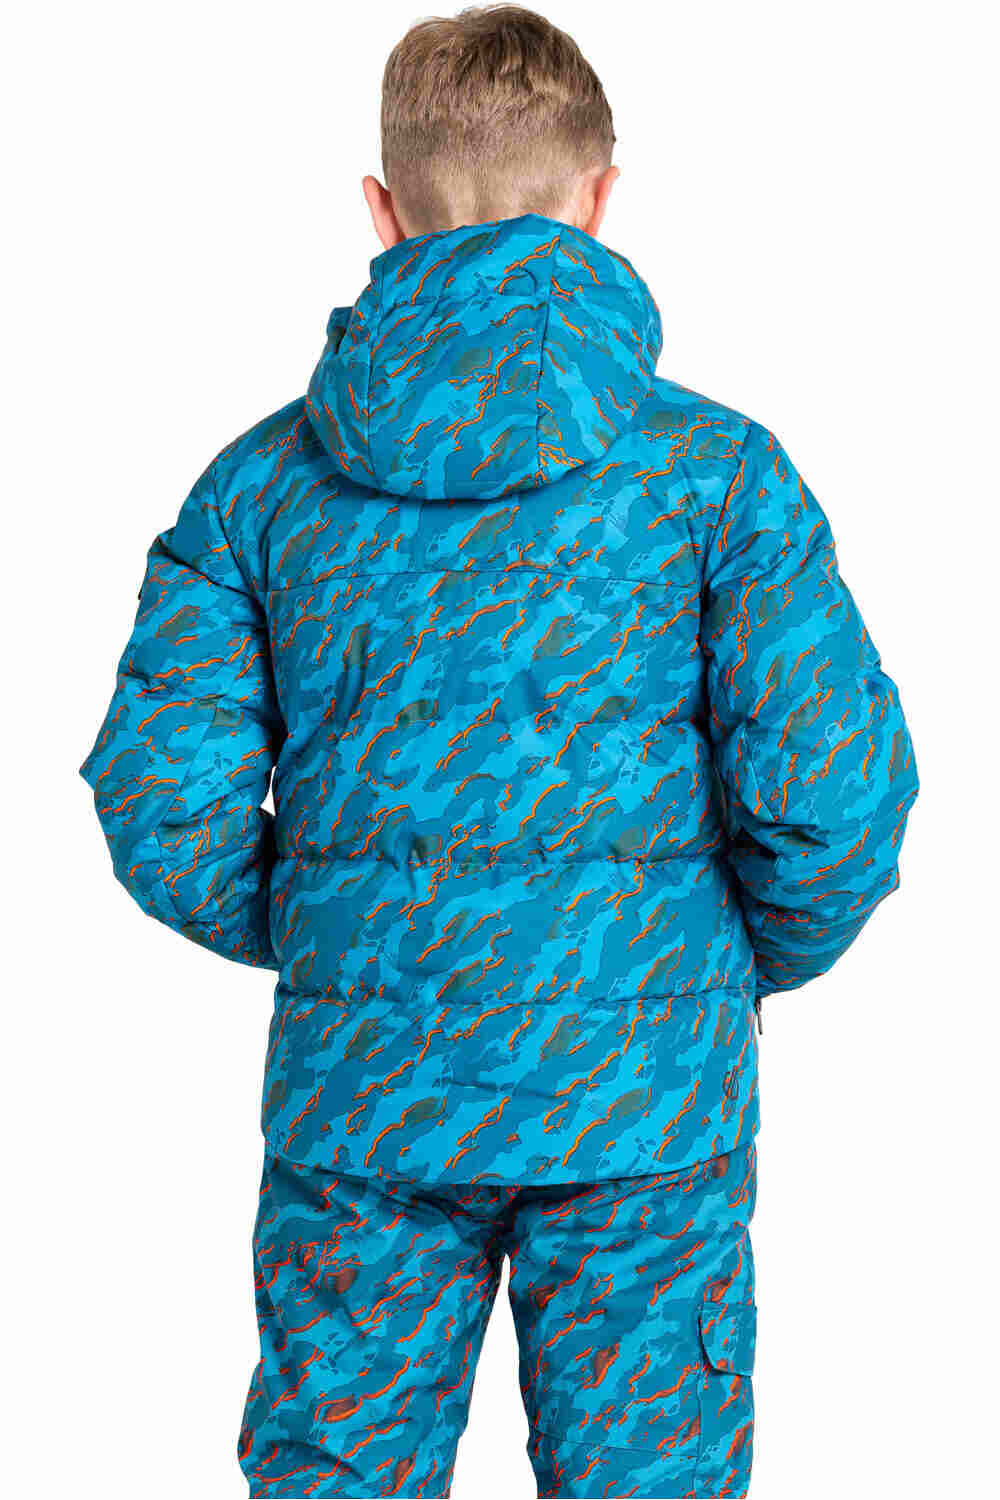 Dare2b chaqueta esquí infantil All About Jacket vista trasera